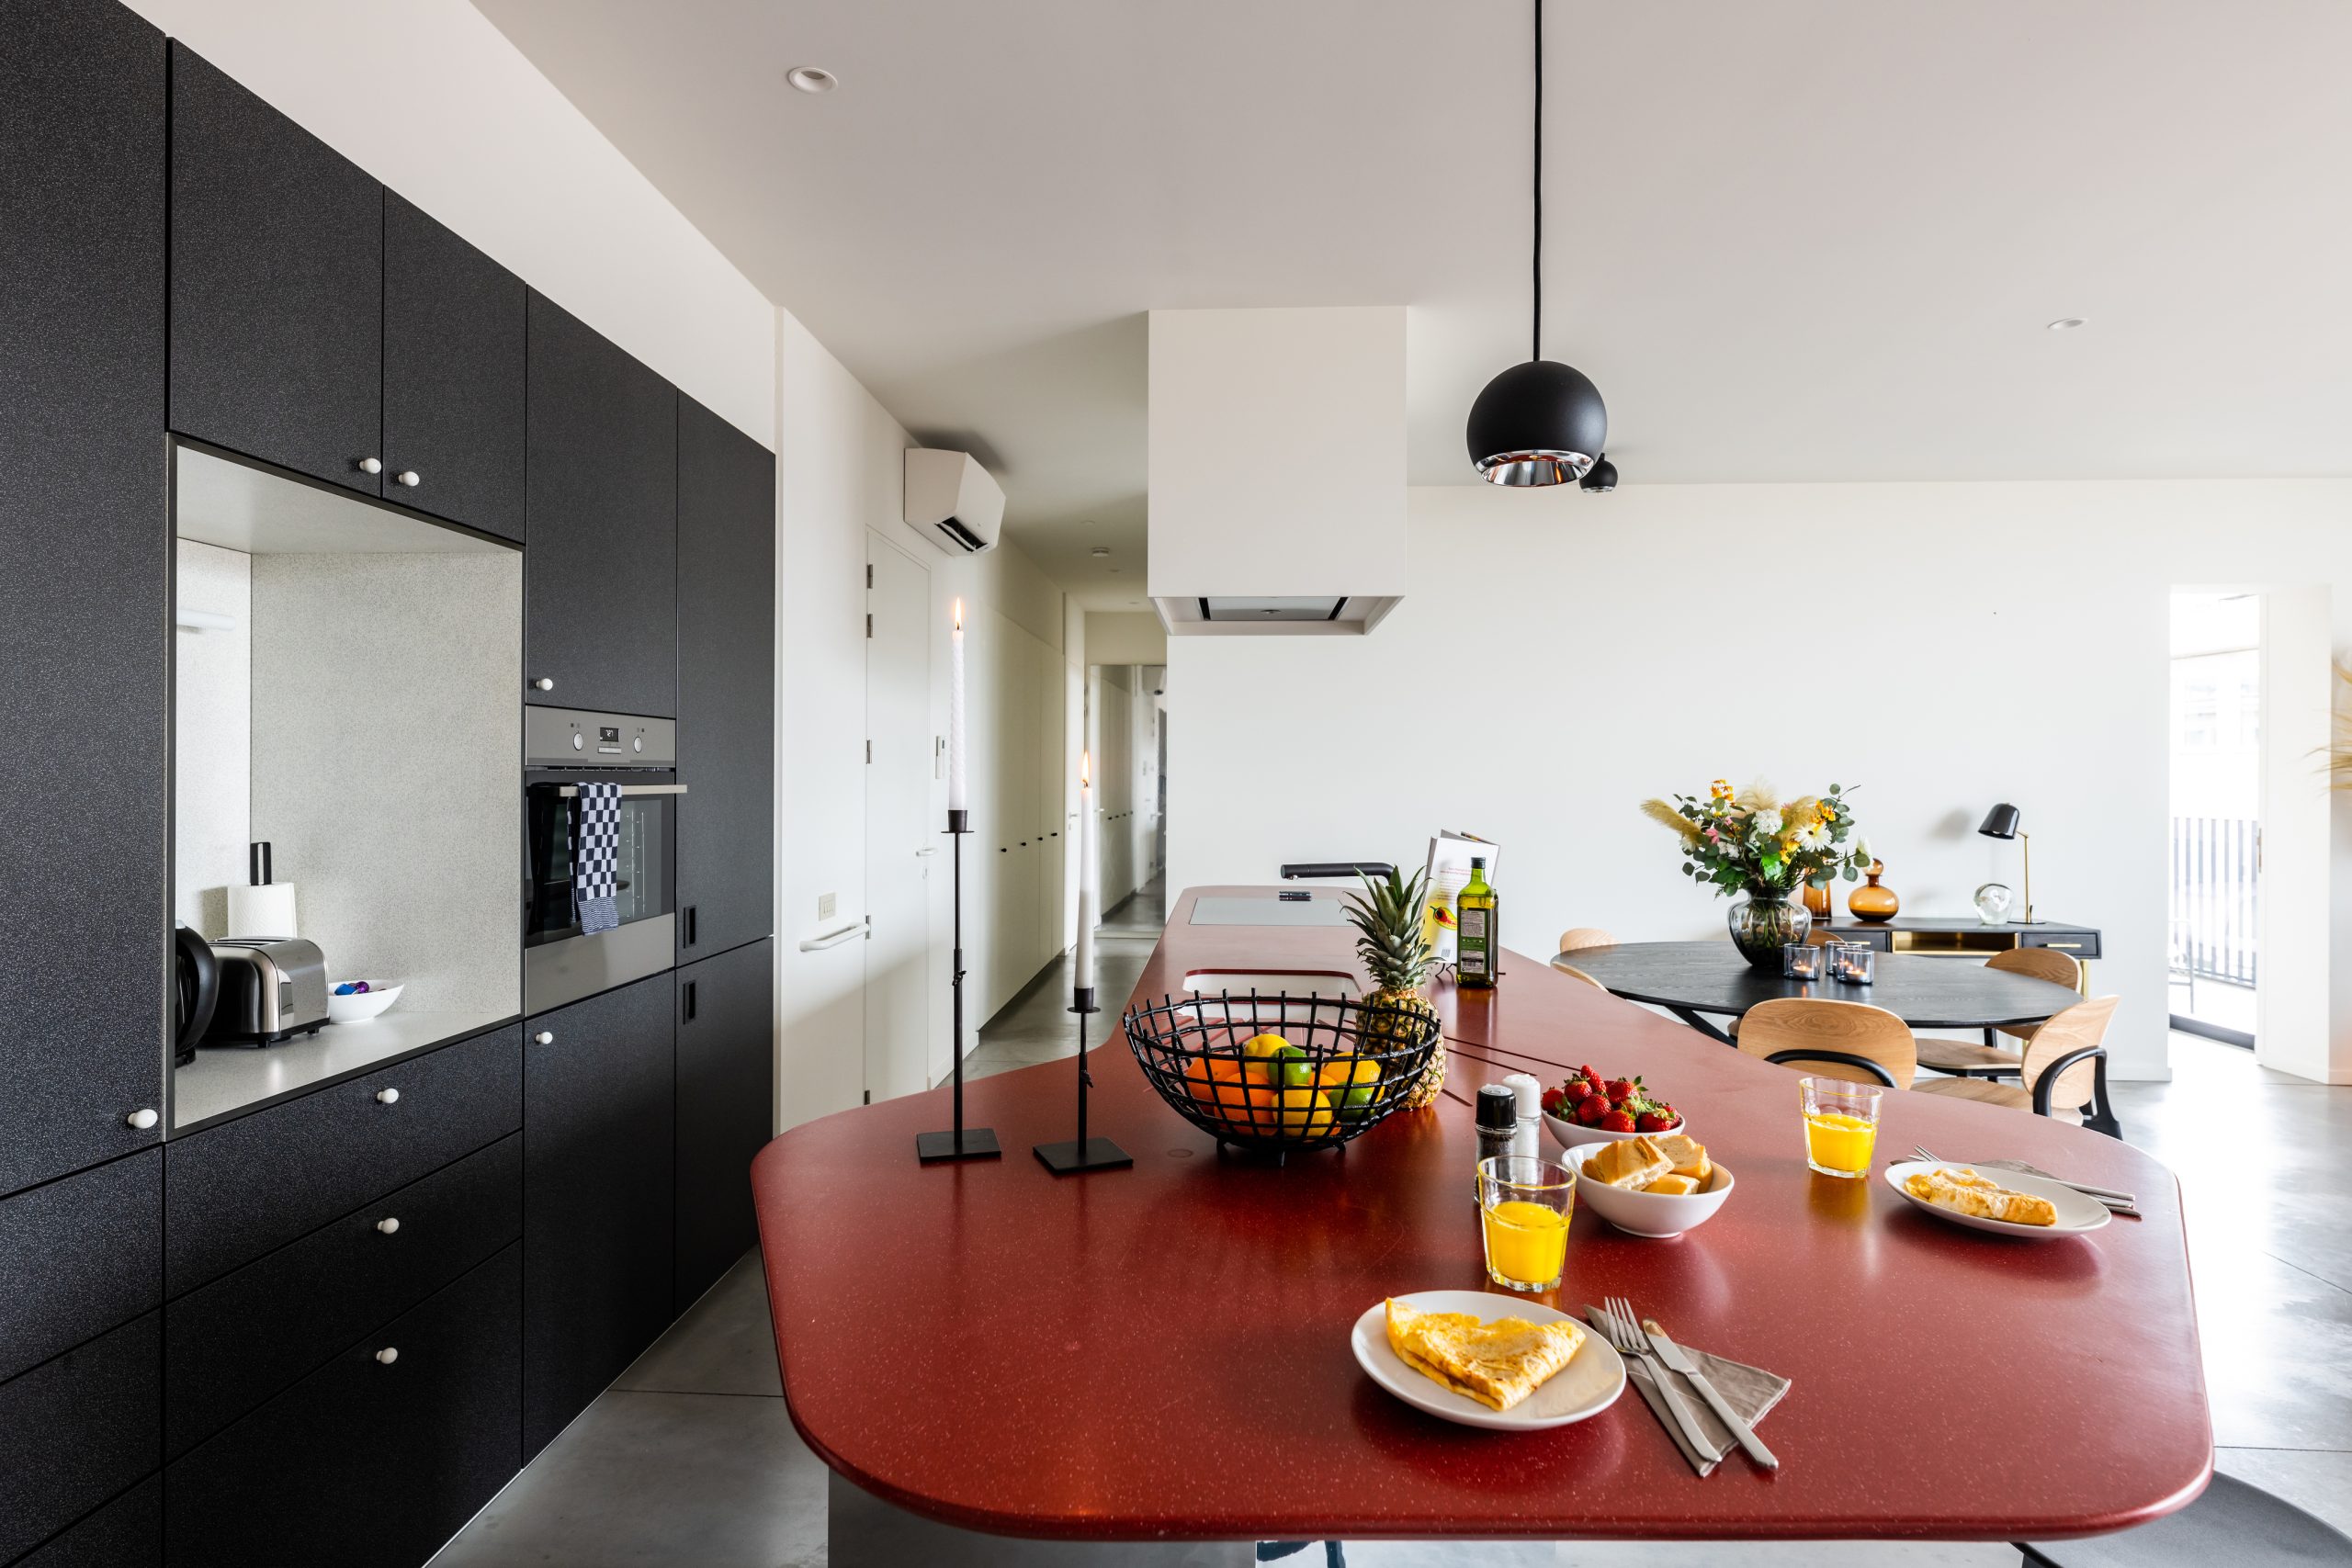 Kitchen 2-bedroom for rent in Brussels